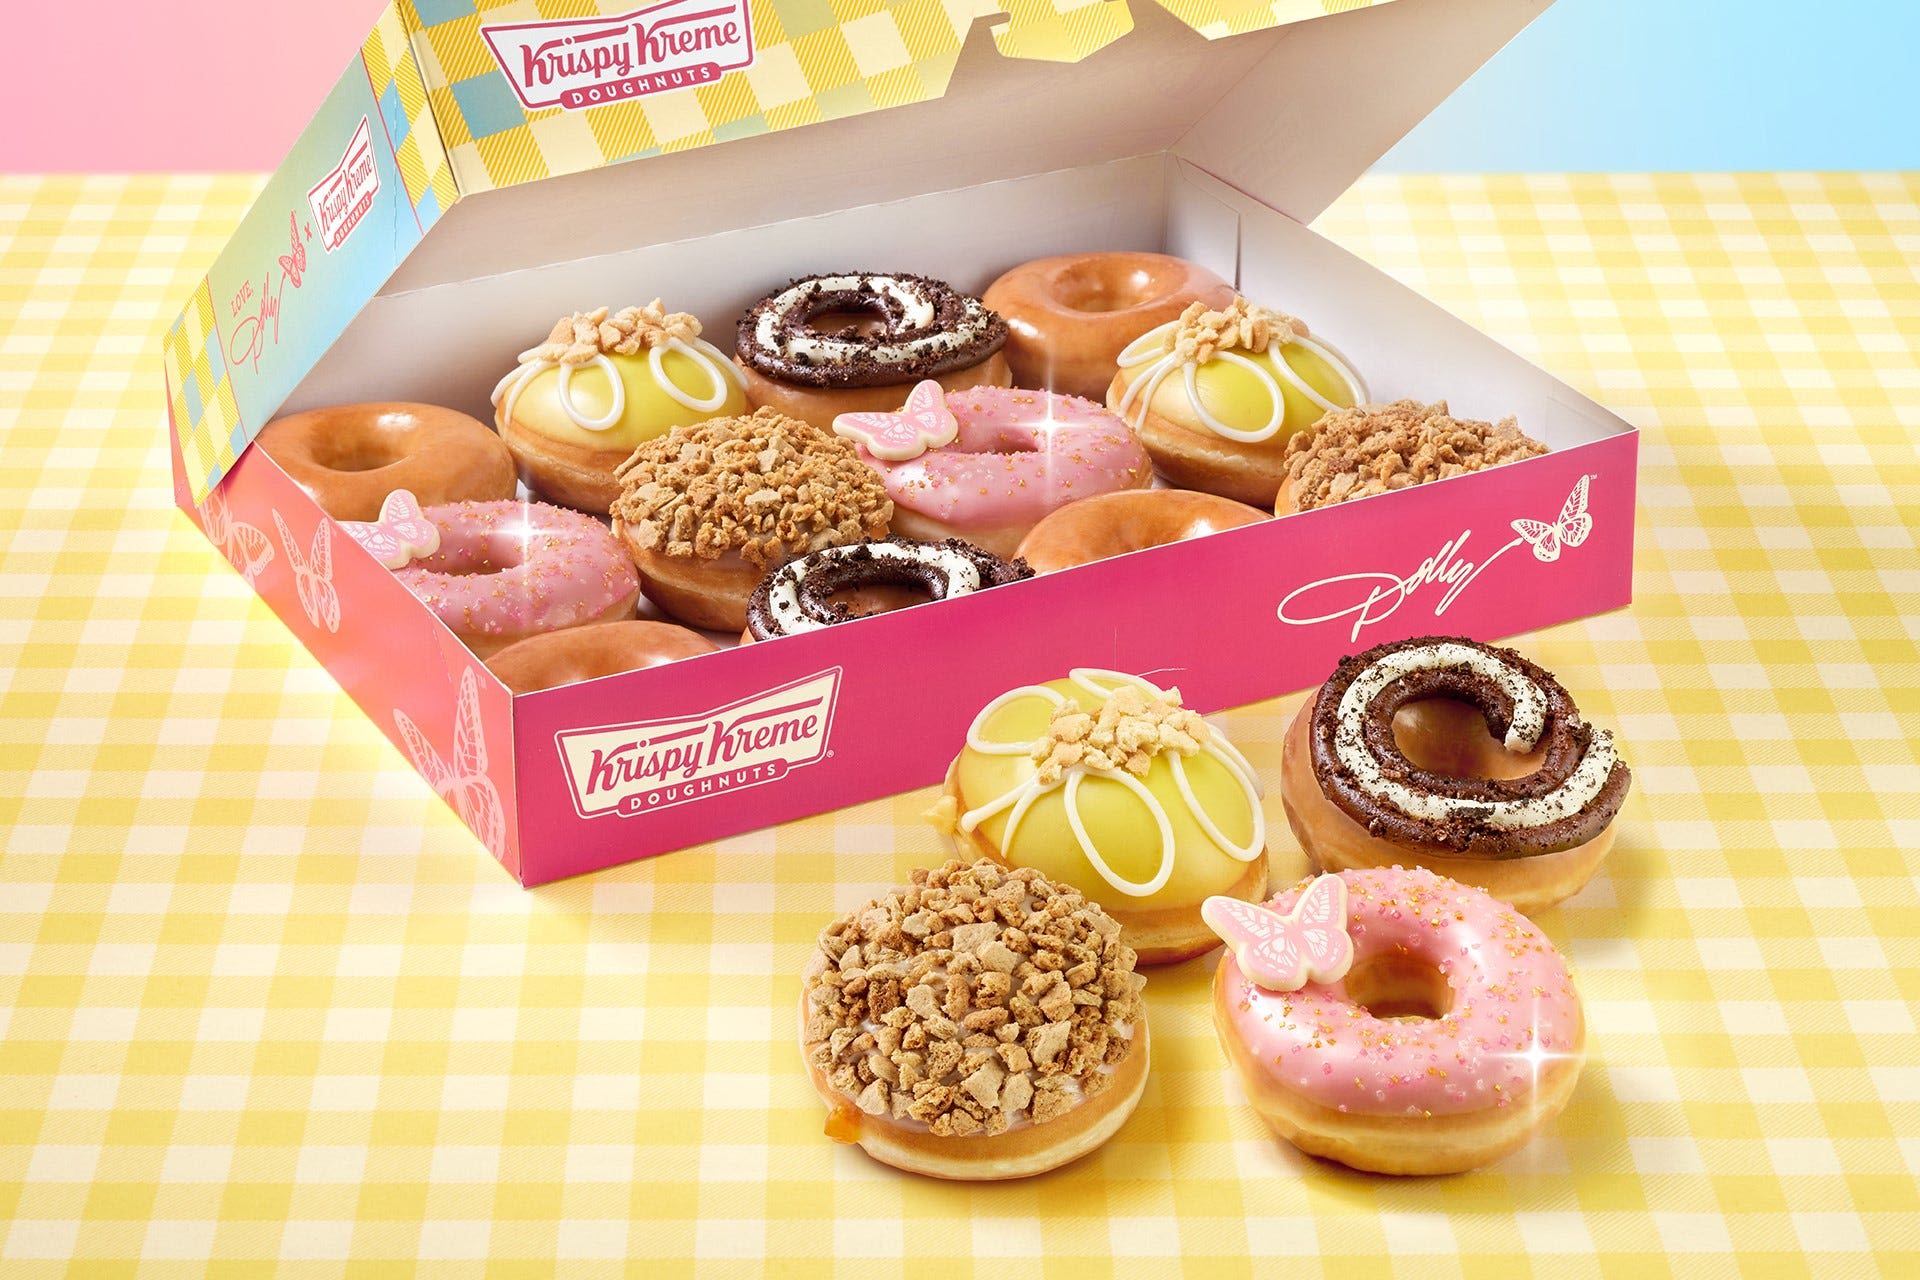 Get a free Krispy Kreme doughnut if you dress up like Dolly Parton on Saturday